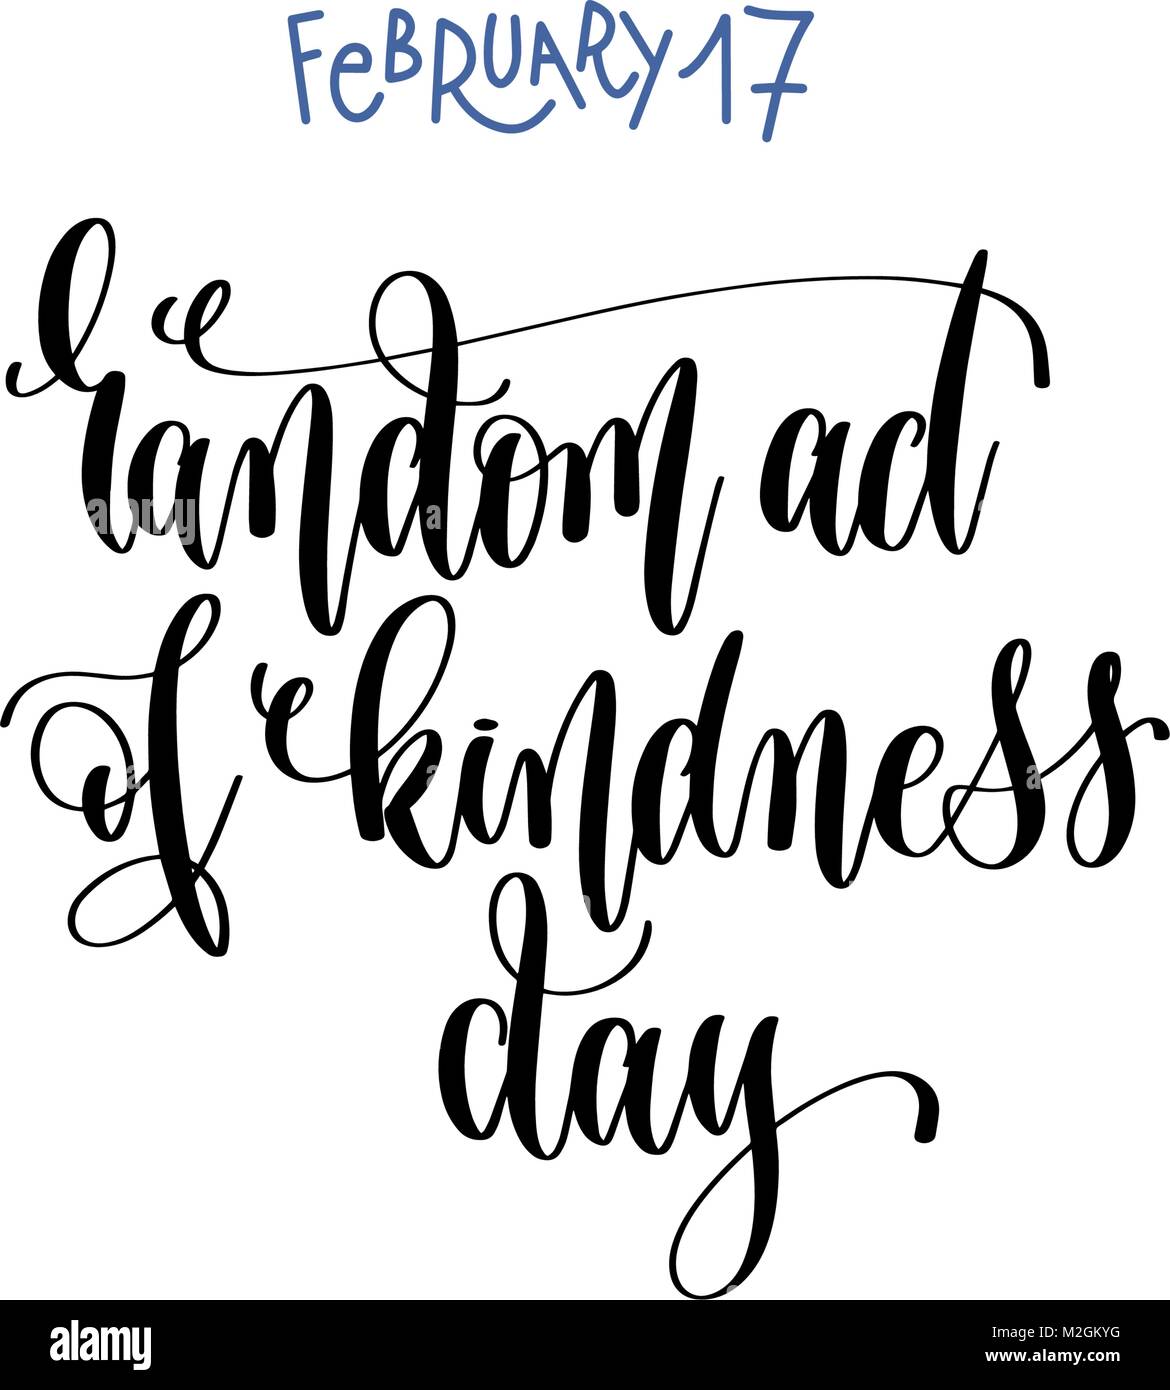 february 17 - random act of kindness day Stock Vector